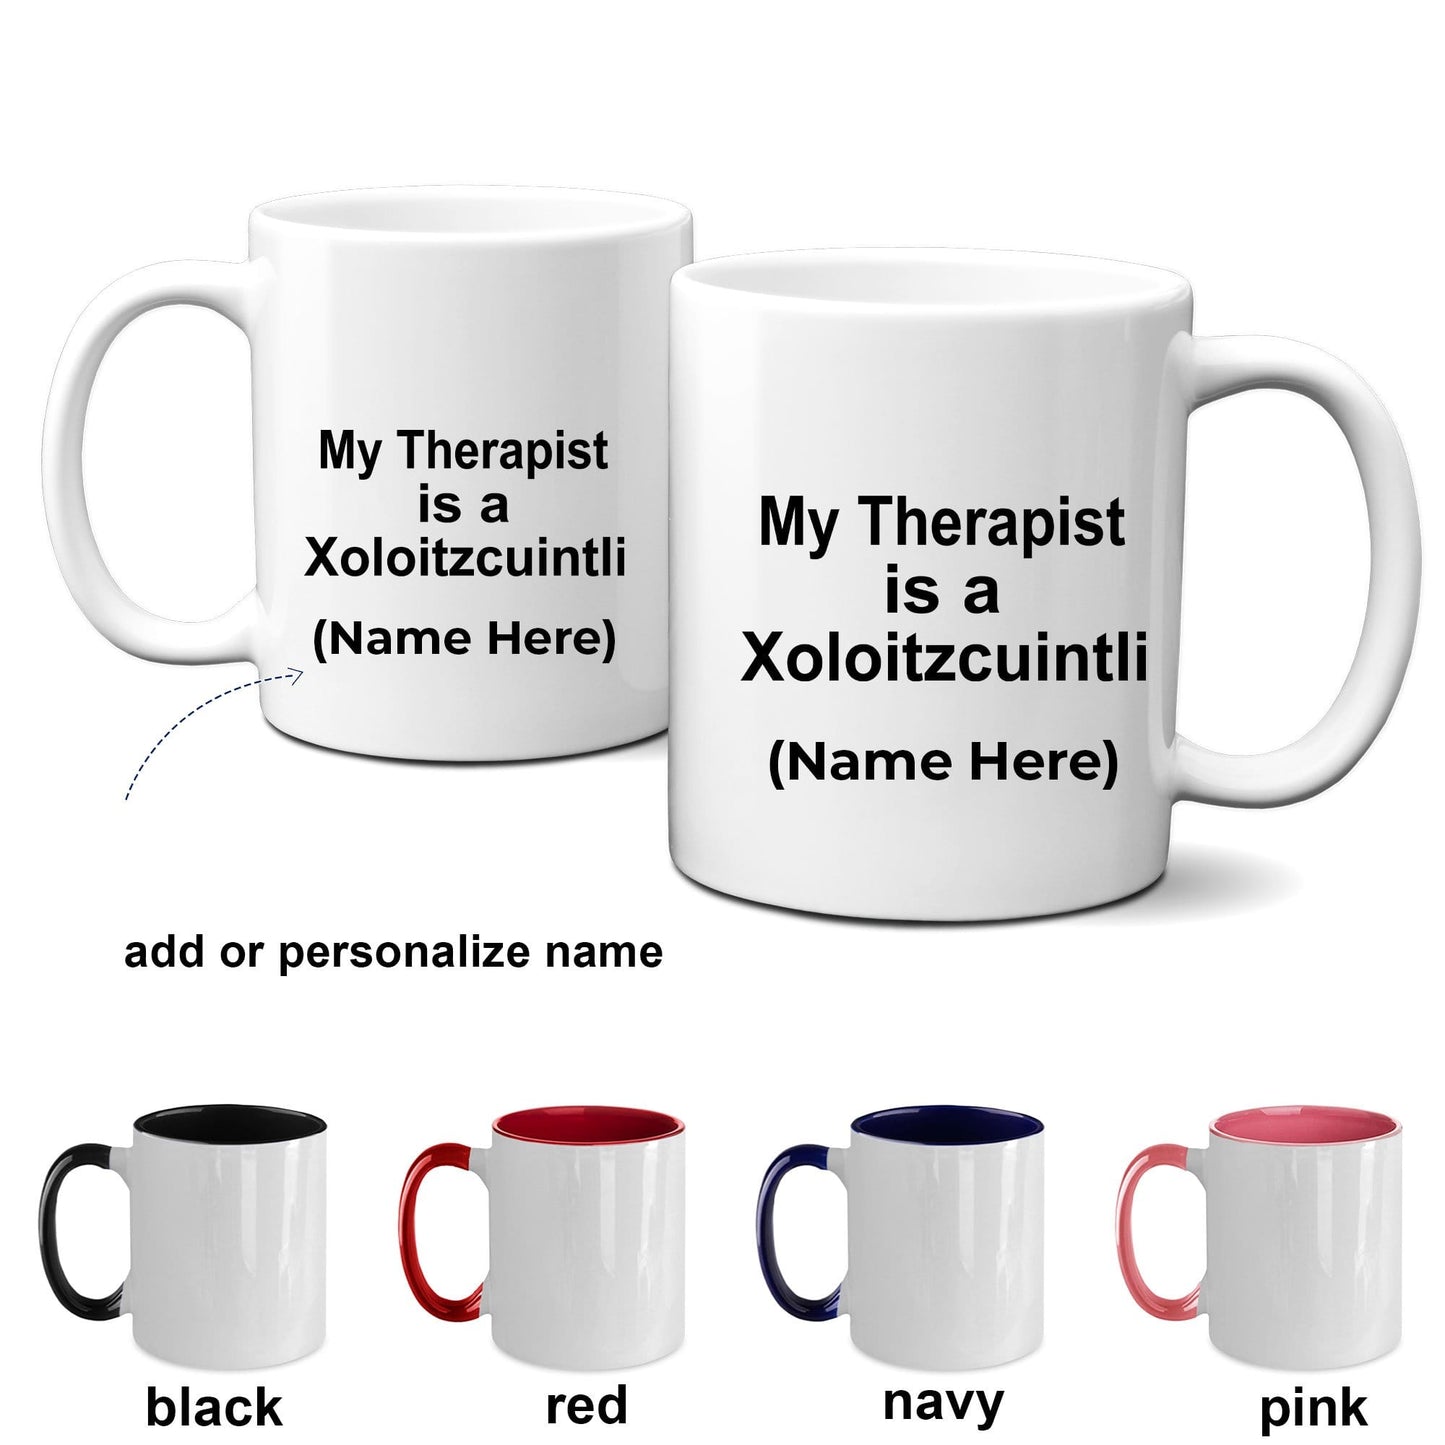 Xoloitzcuintli Dog Funny Gift Therapist Ceramic Coffee Mug